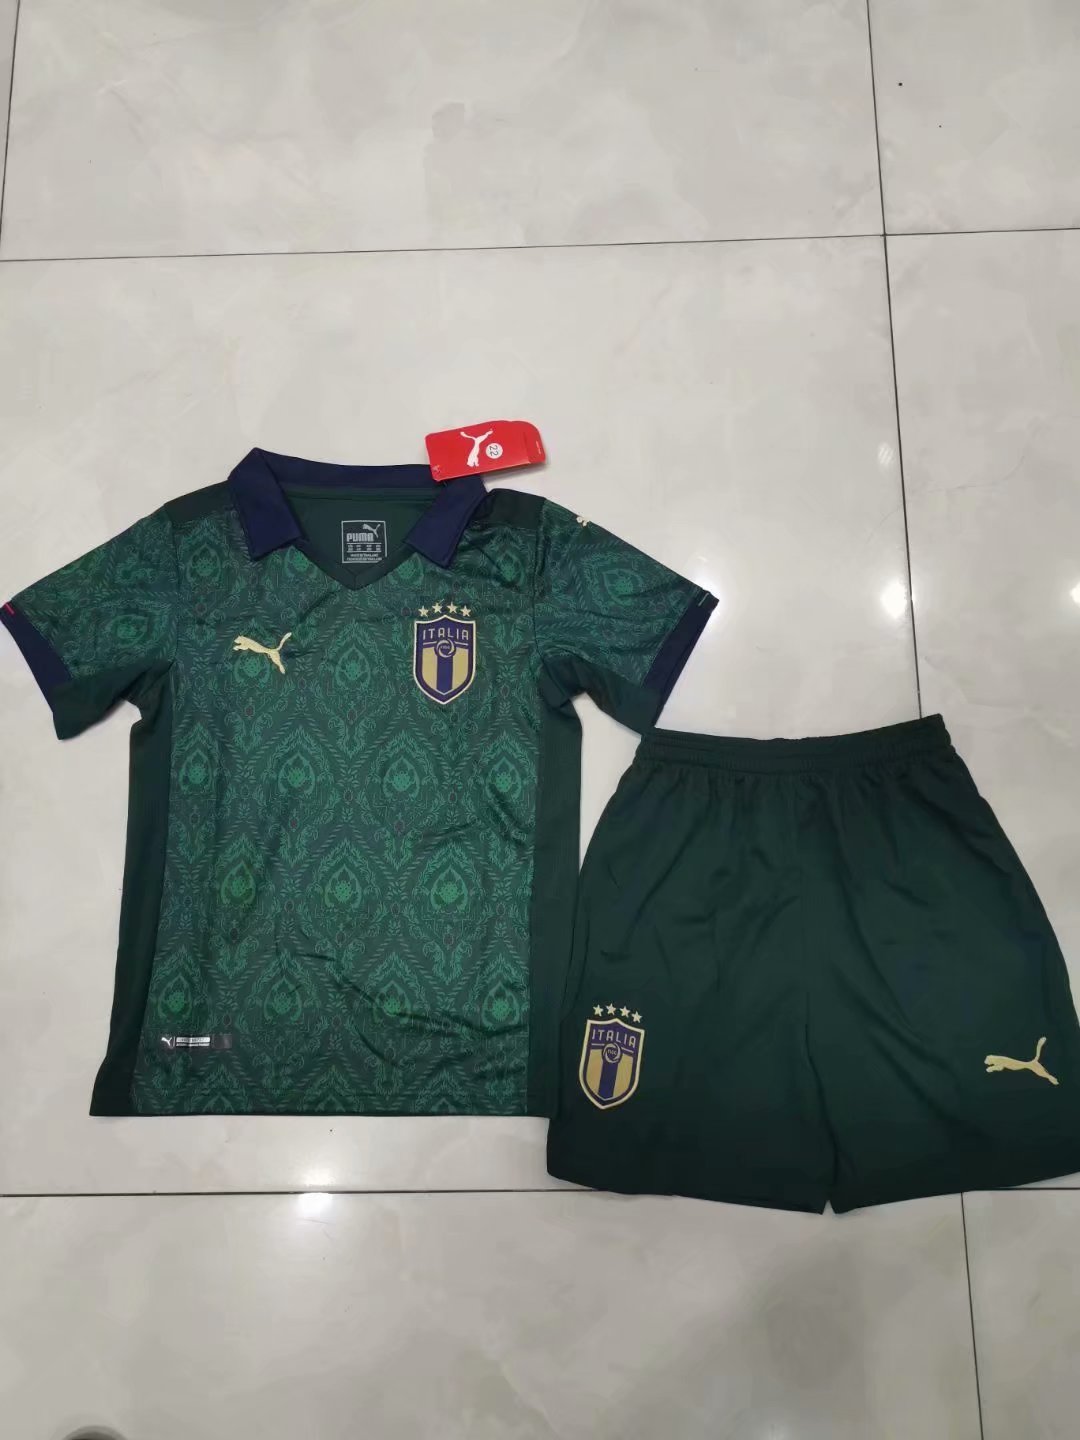 Italy Third away kids kit 2020 European Cup Football jersey